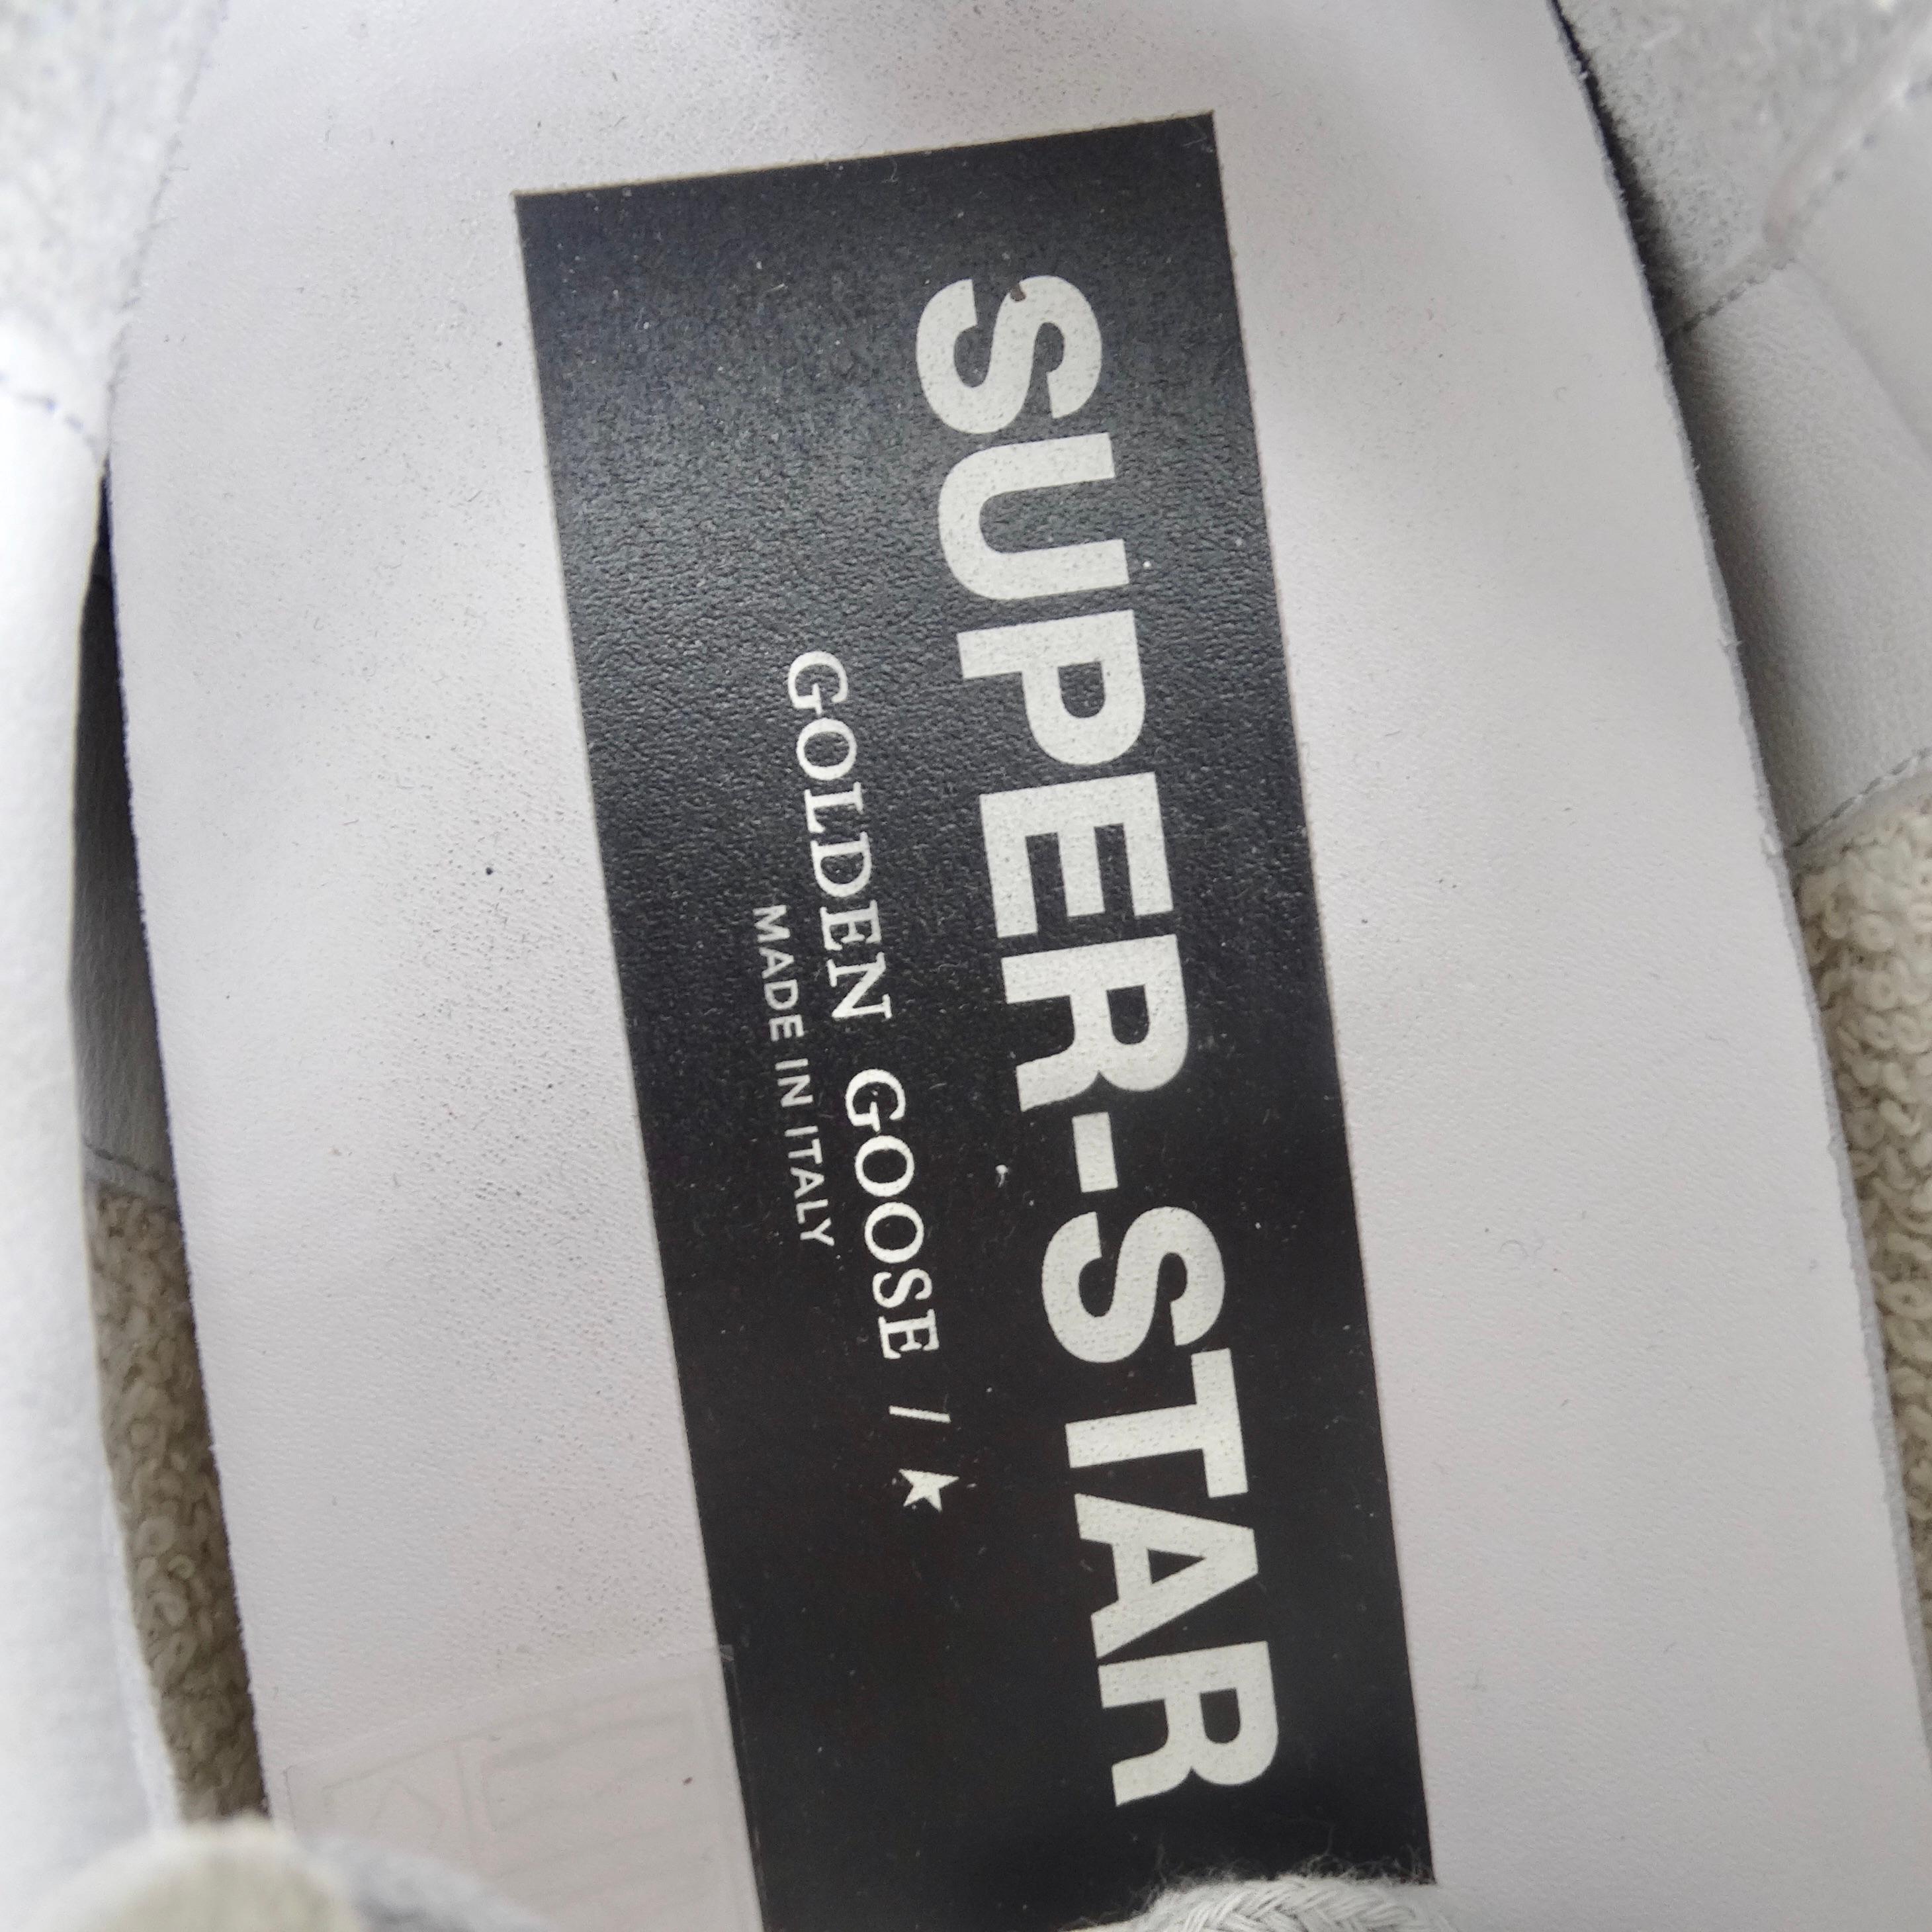  Golden Goose Superstar Swarovski Crystal Suede Sneakers 7